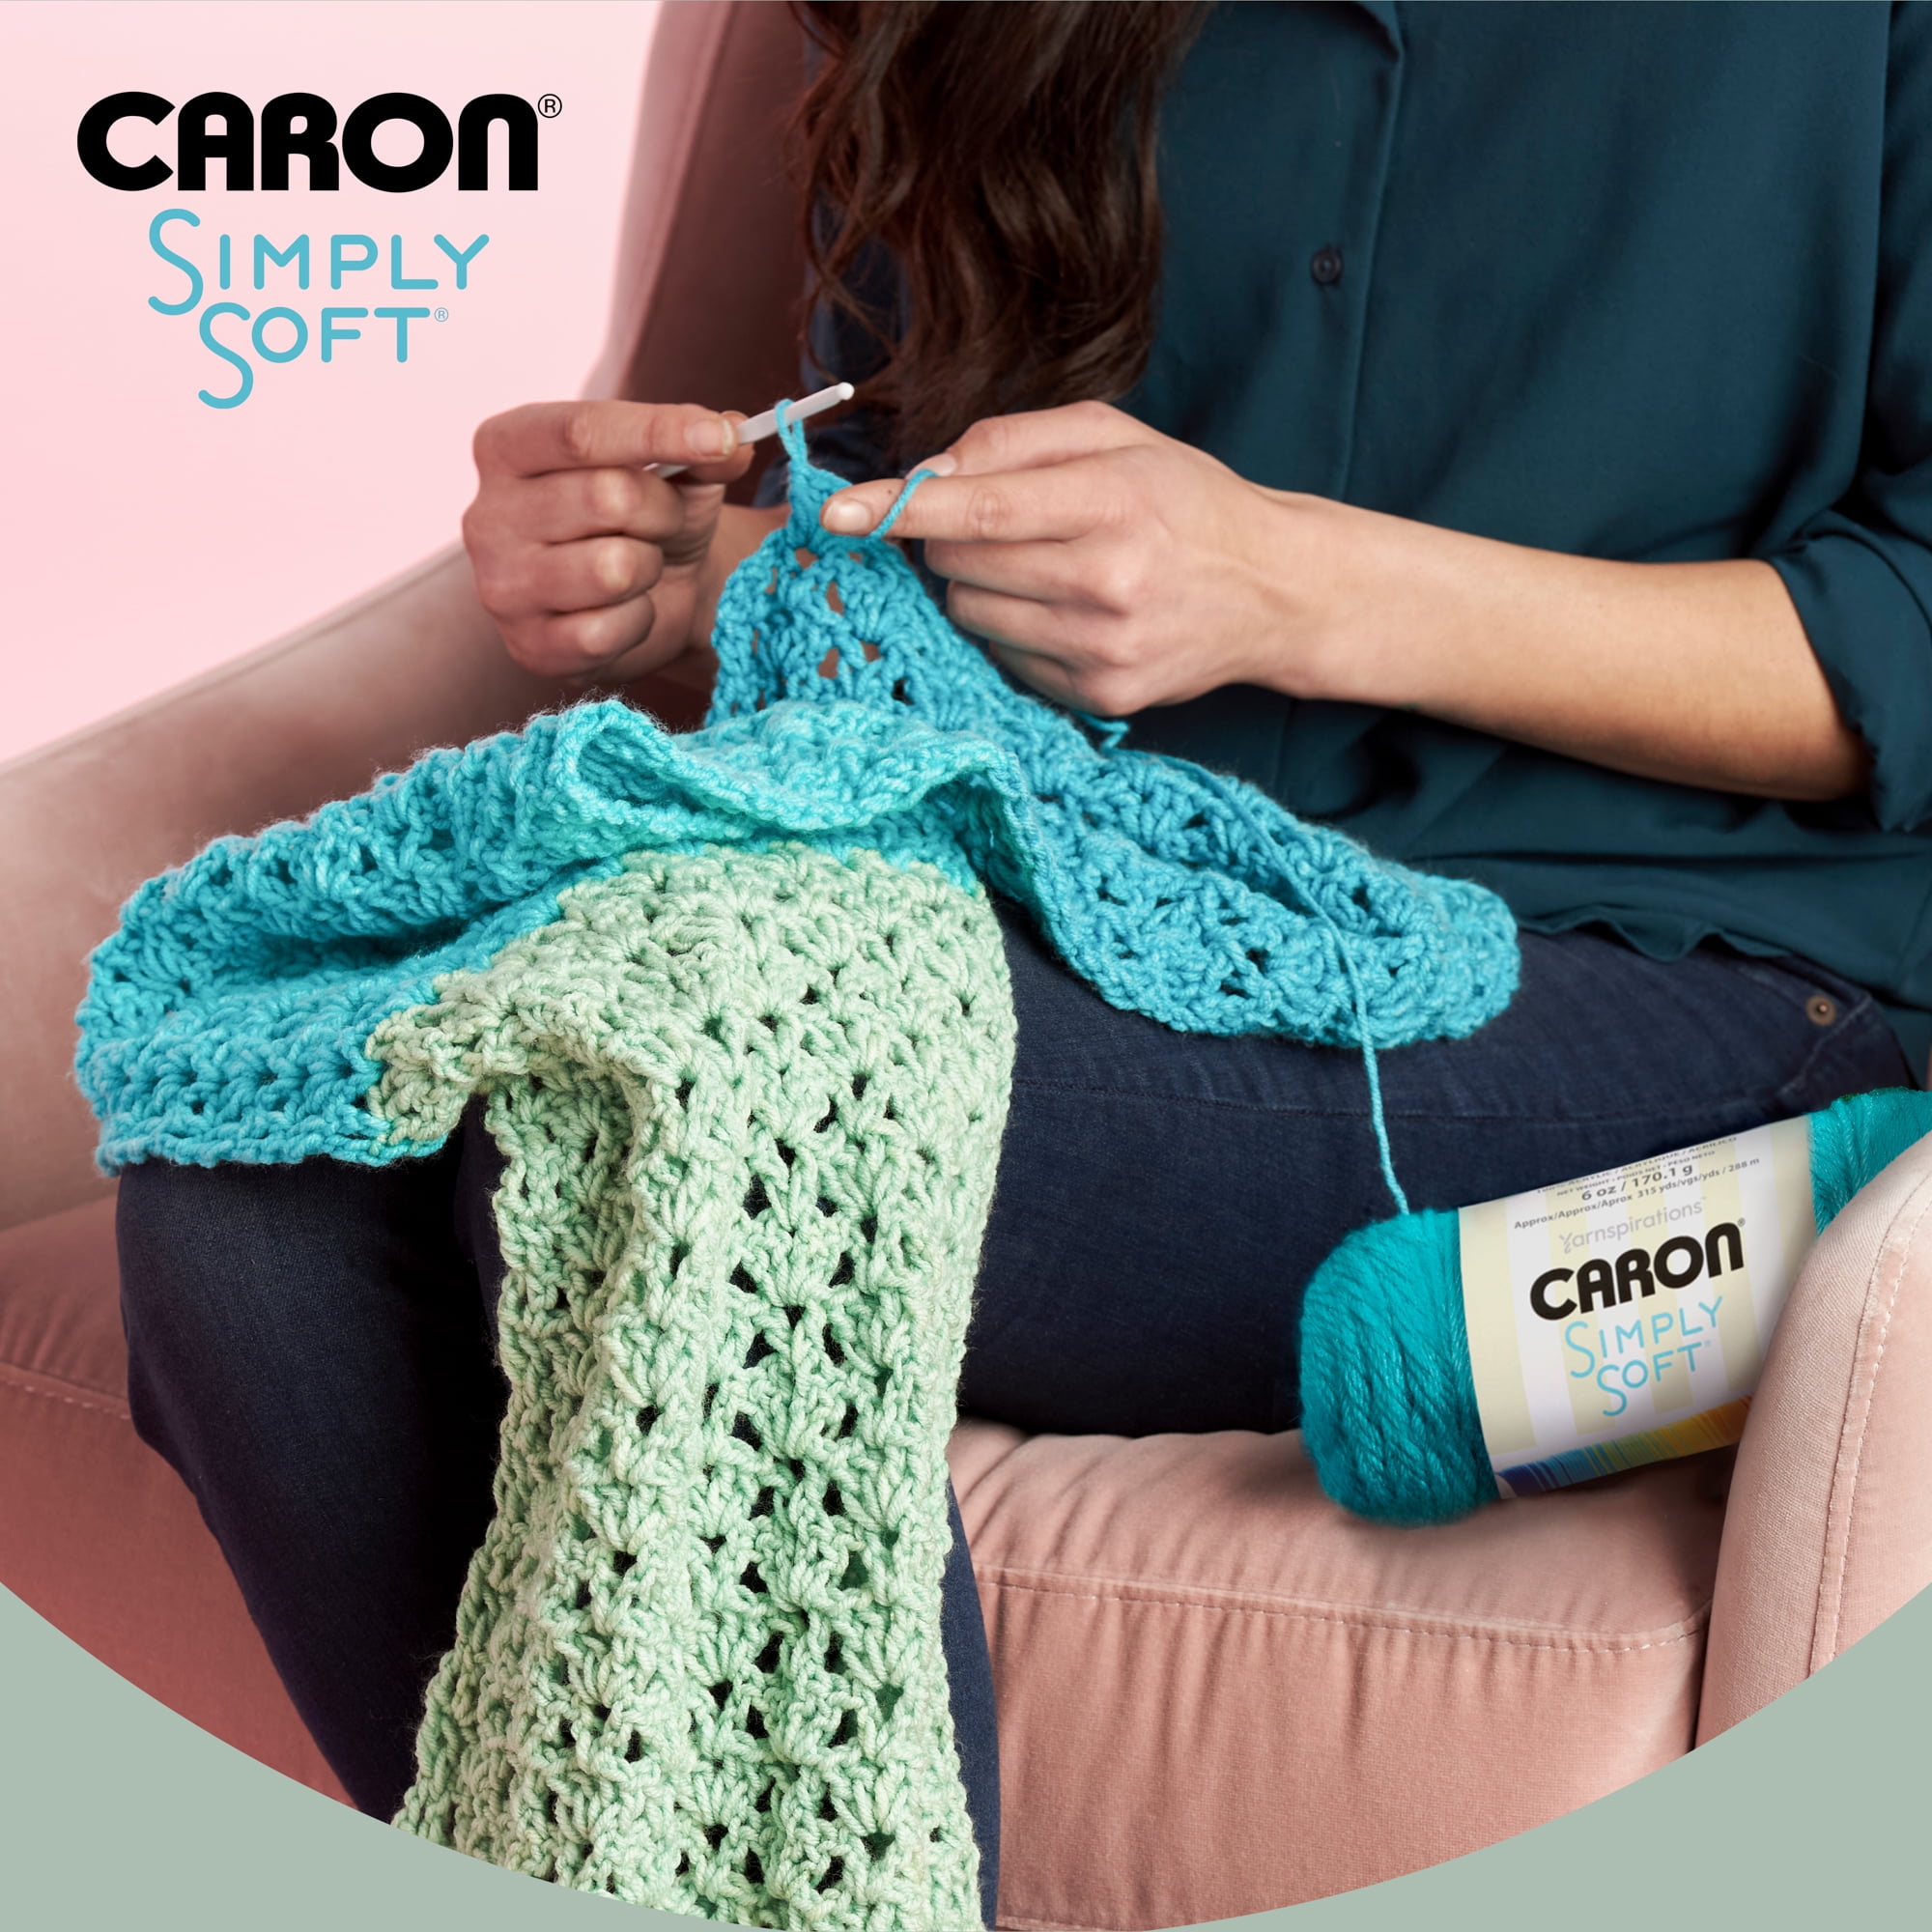 Caron Simply Soft Yarn - Red